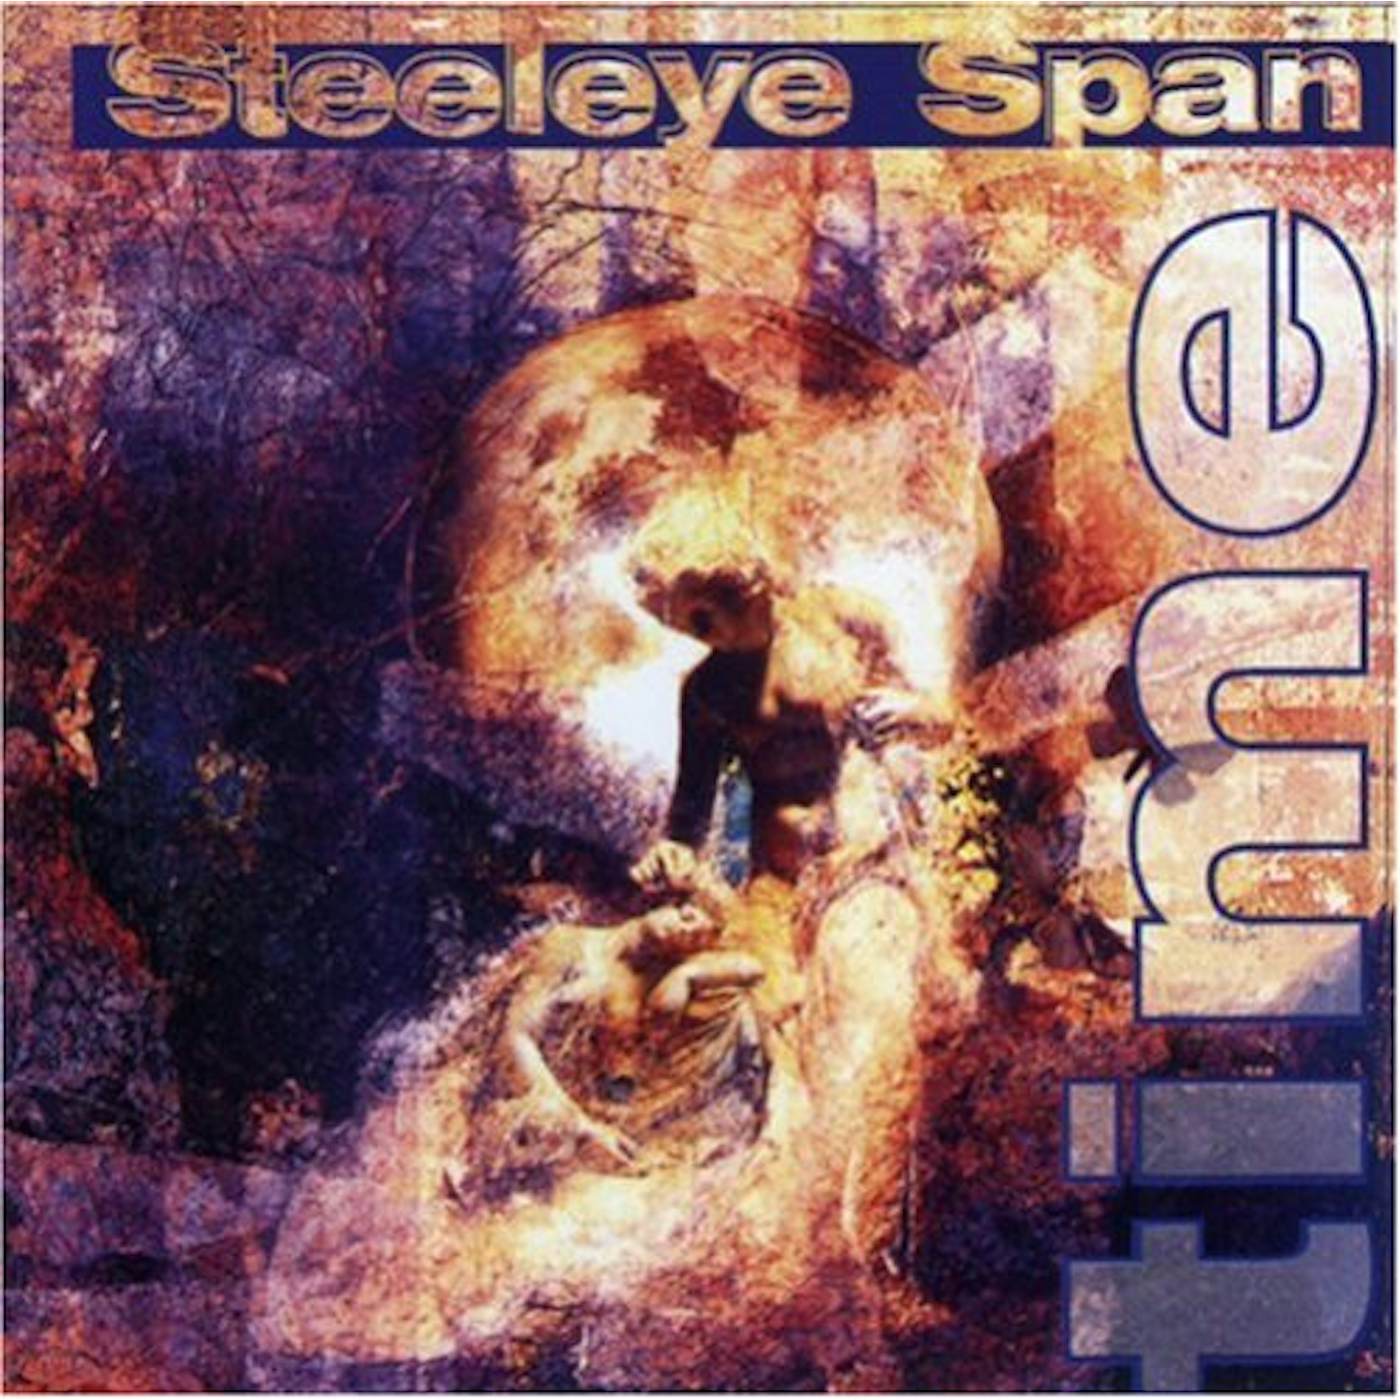 Steeleye Span TIME CD